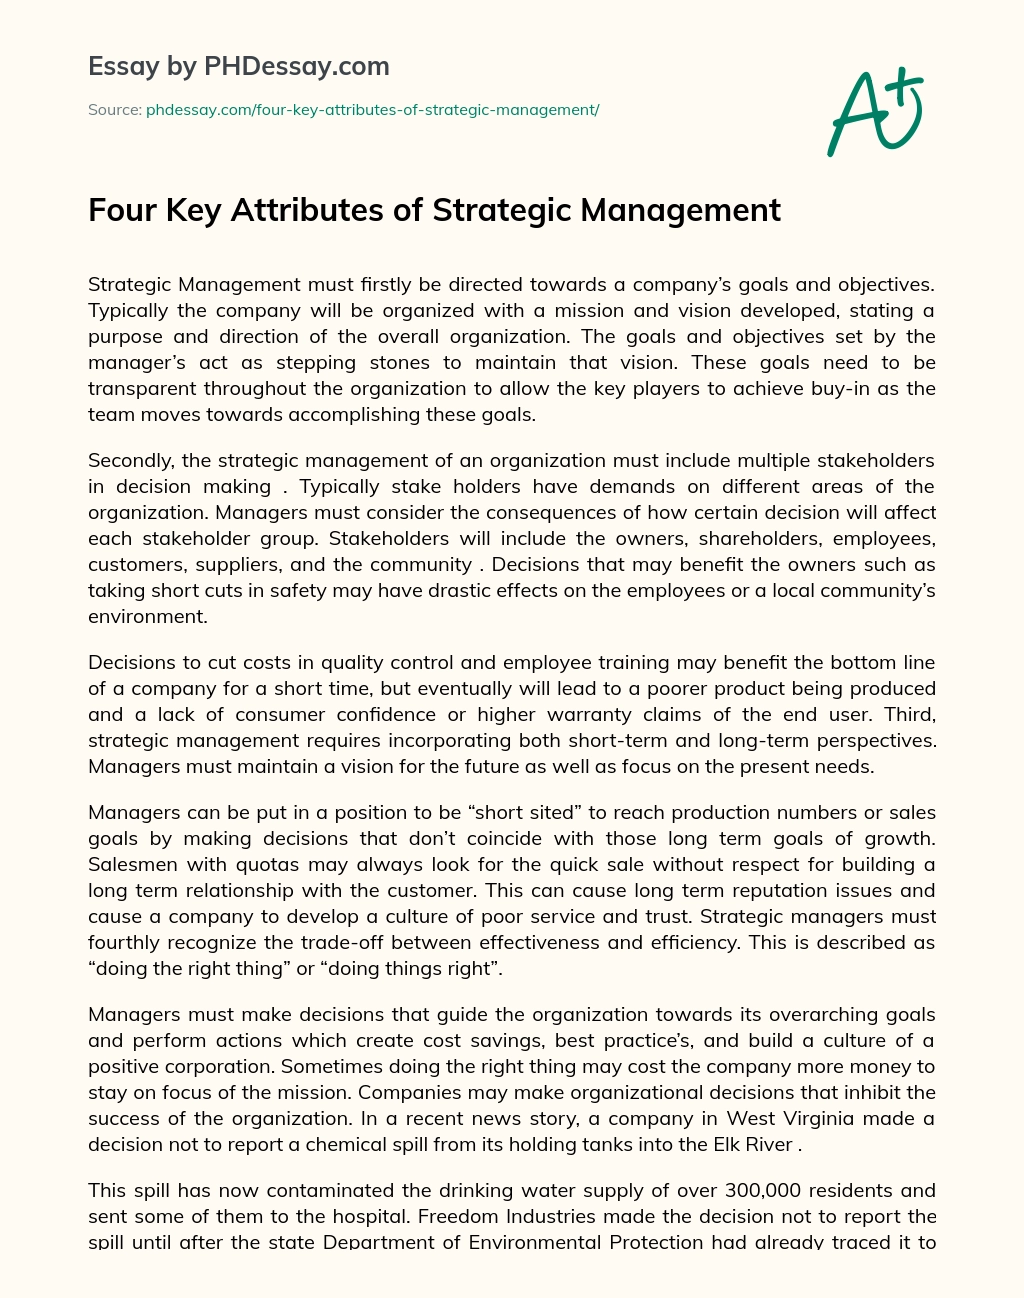 Four Key Attributes of Strategic Management essay